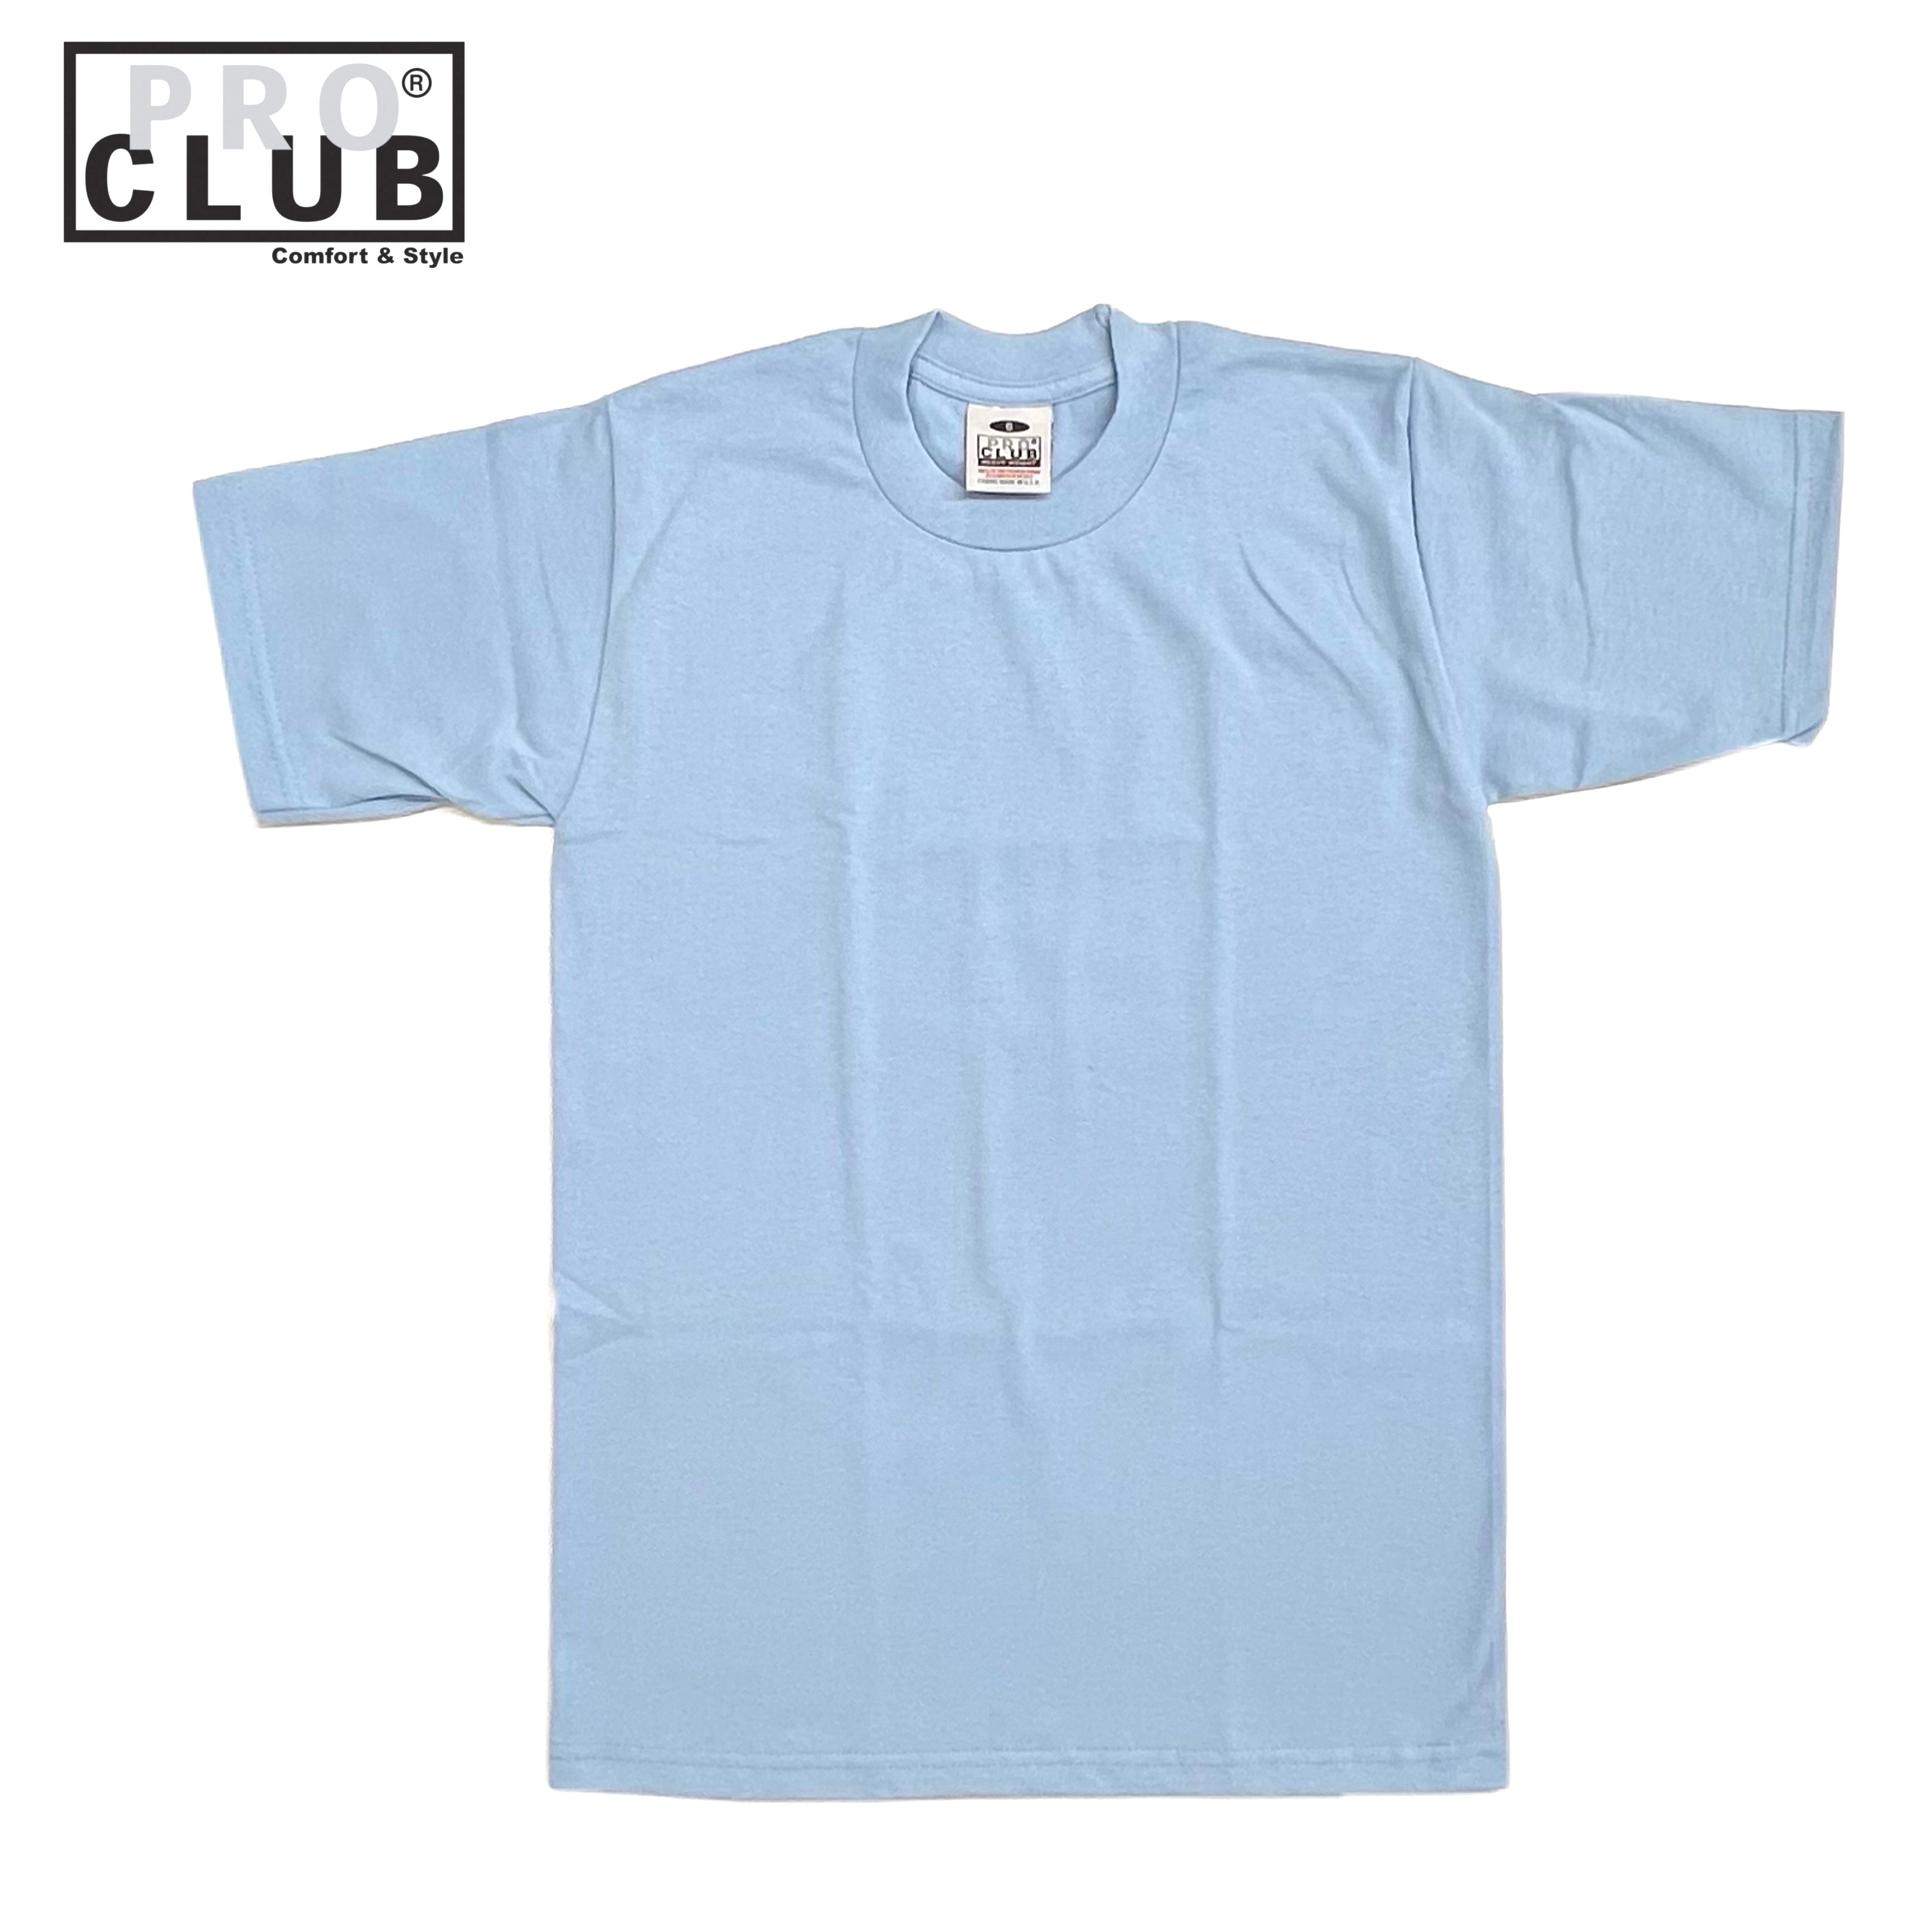 Pro Club Men's Heavyweight Cotton Short Sleeve Crew Neck T-Shirt - Sky Blue